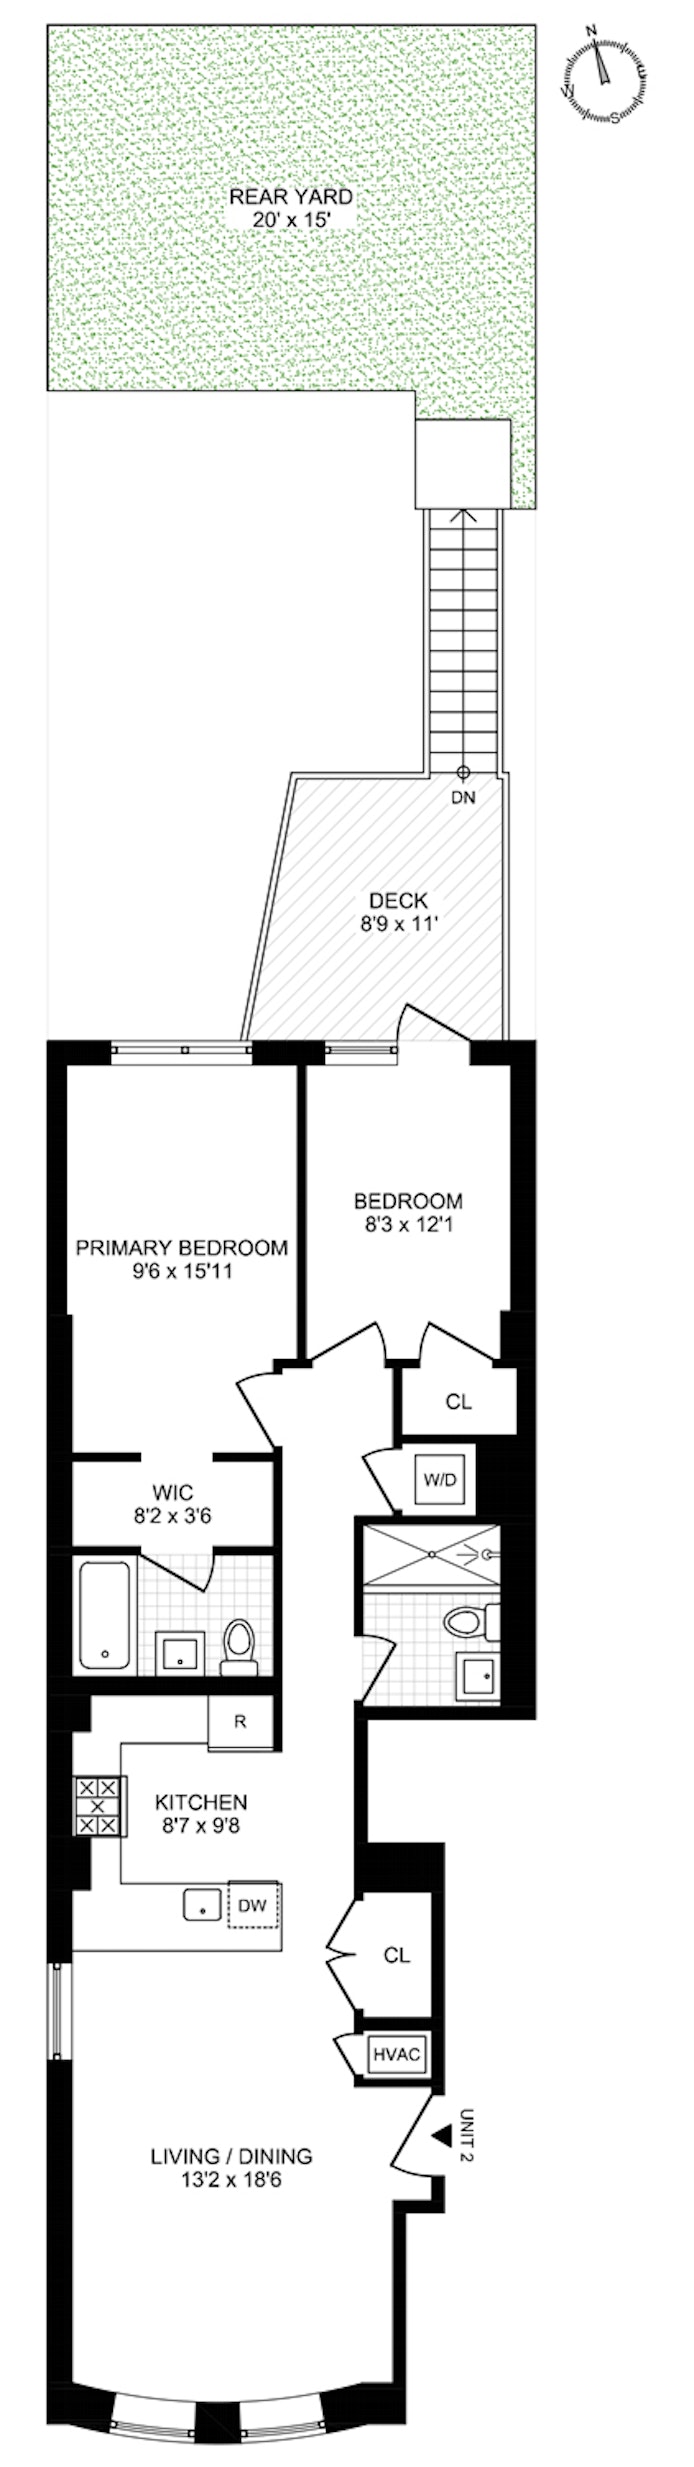 Floorplan for 1007 Bergen Street, 1A